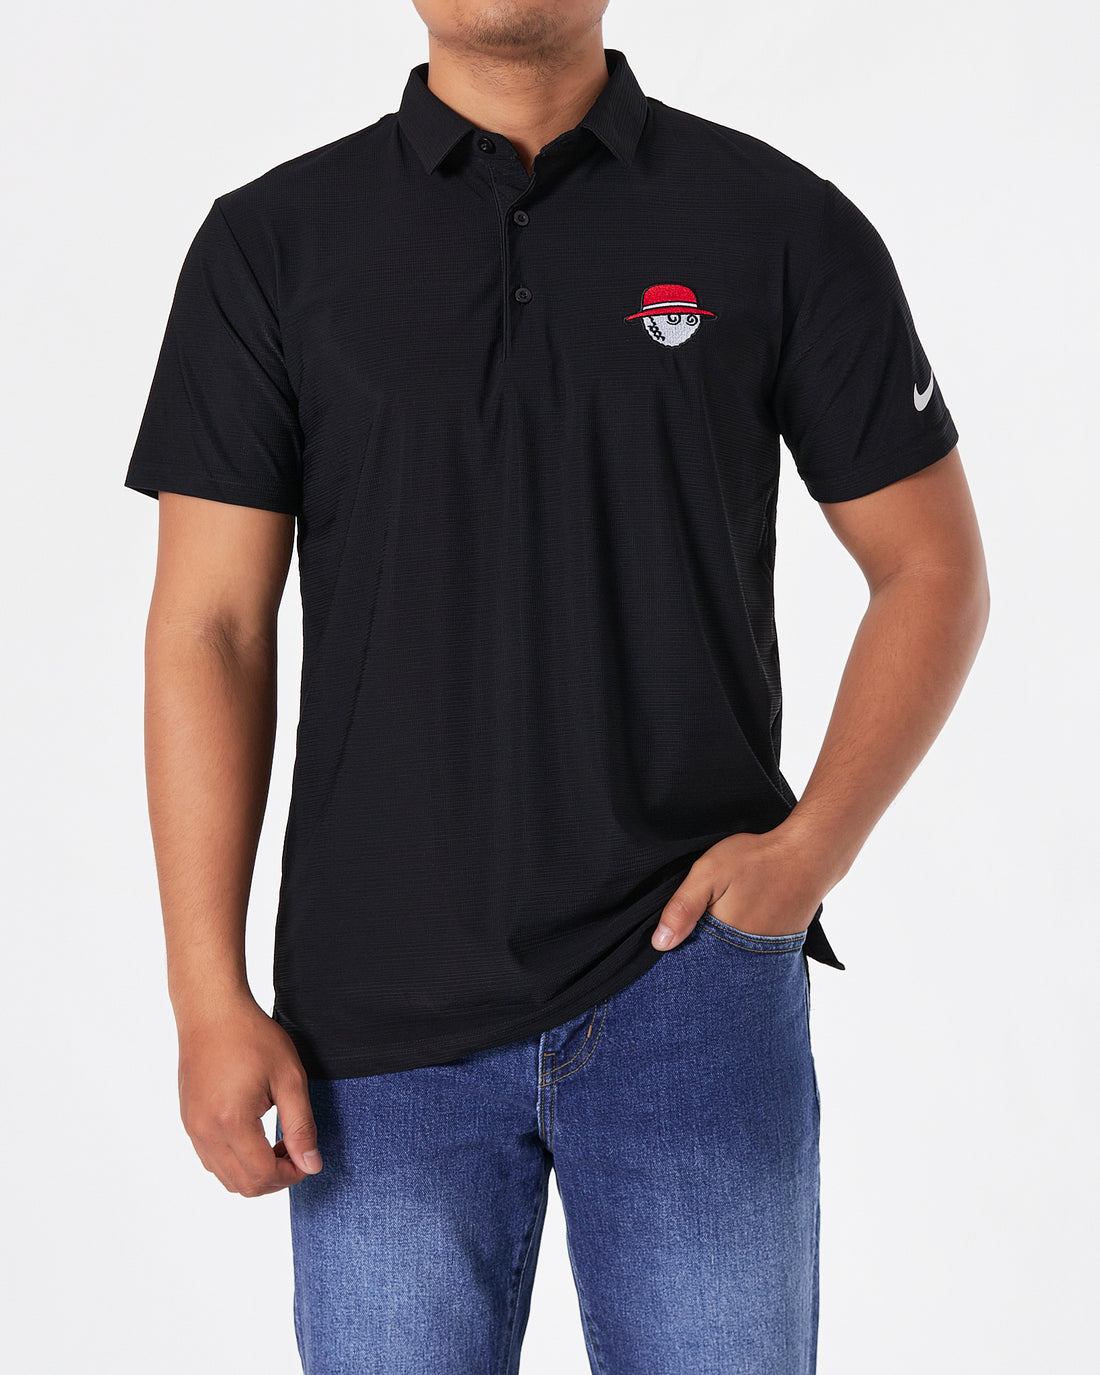 MAL Cartoon Embroidered Men Black Sport Polo Shirt 19.90